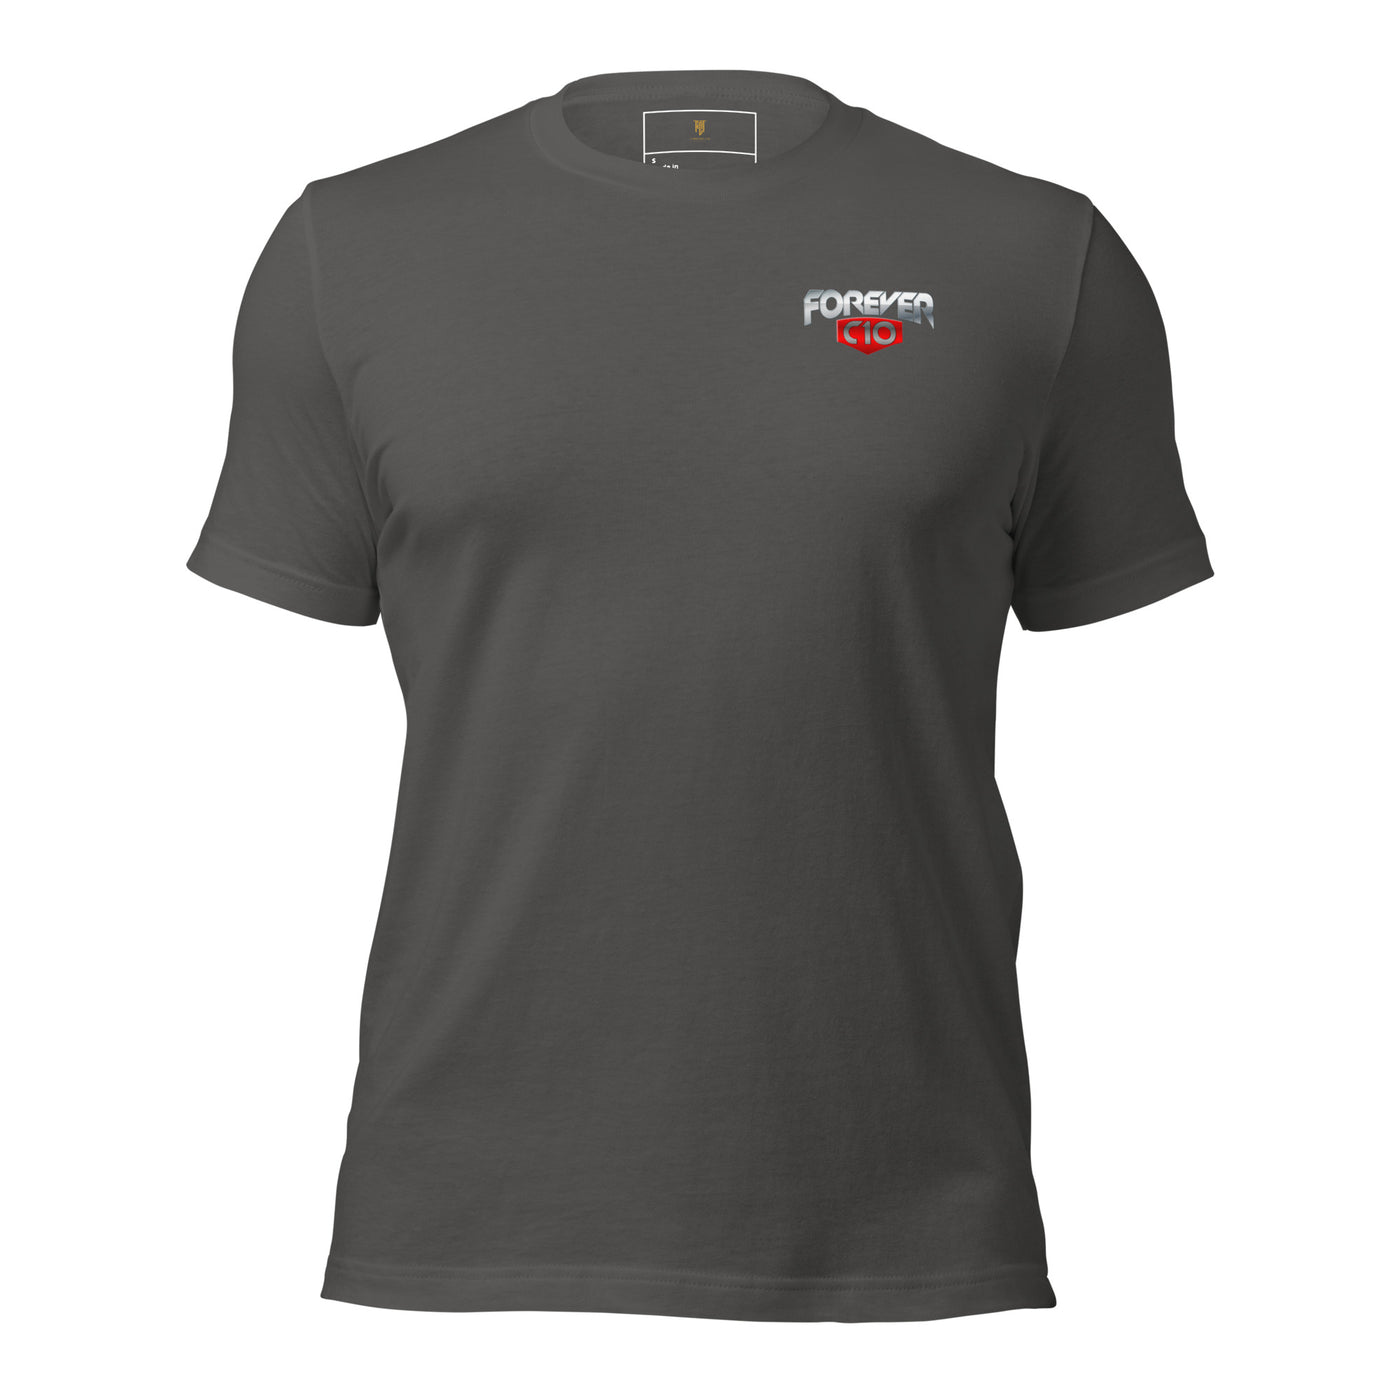 Ironclad Forever Unisex T-shirt (Back Print); Everyday Unisex T-shirts, Inclusive Unisex Wardrobe Staples, Diverse Unisex Tee Selection, Classic Unisex Tee Designs